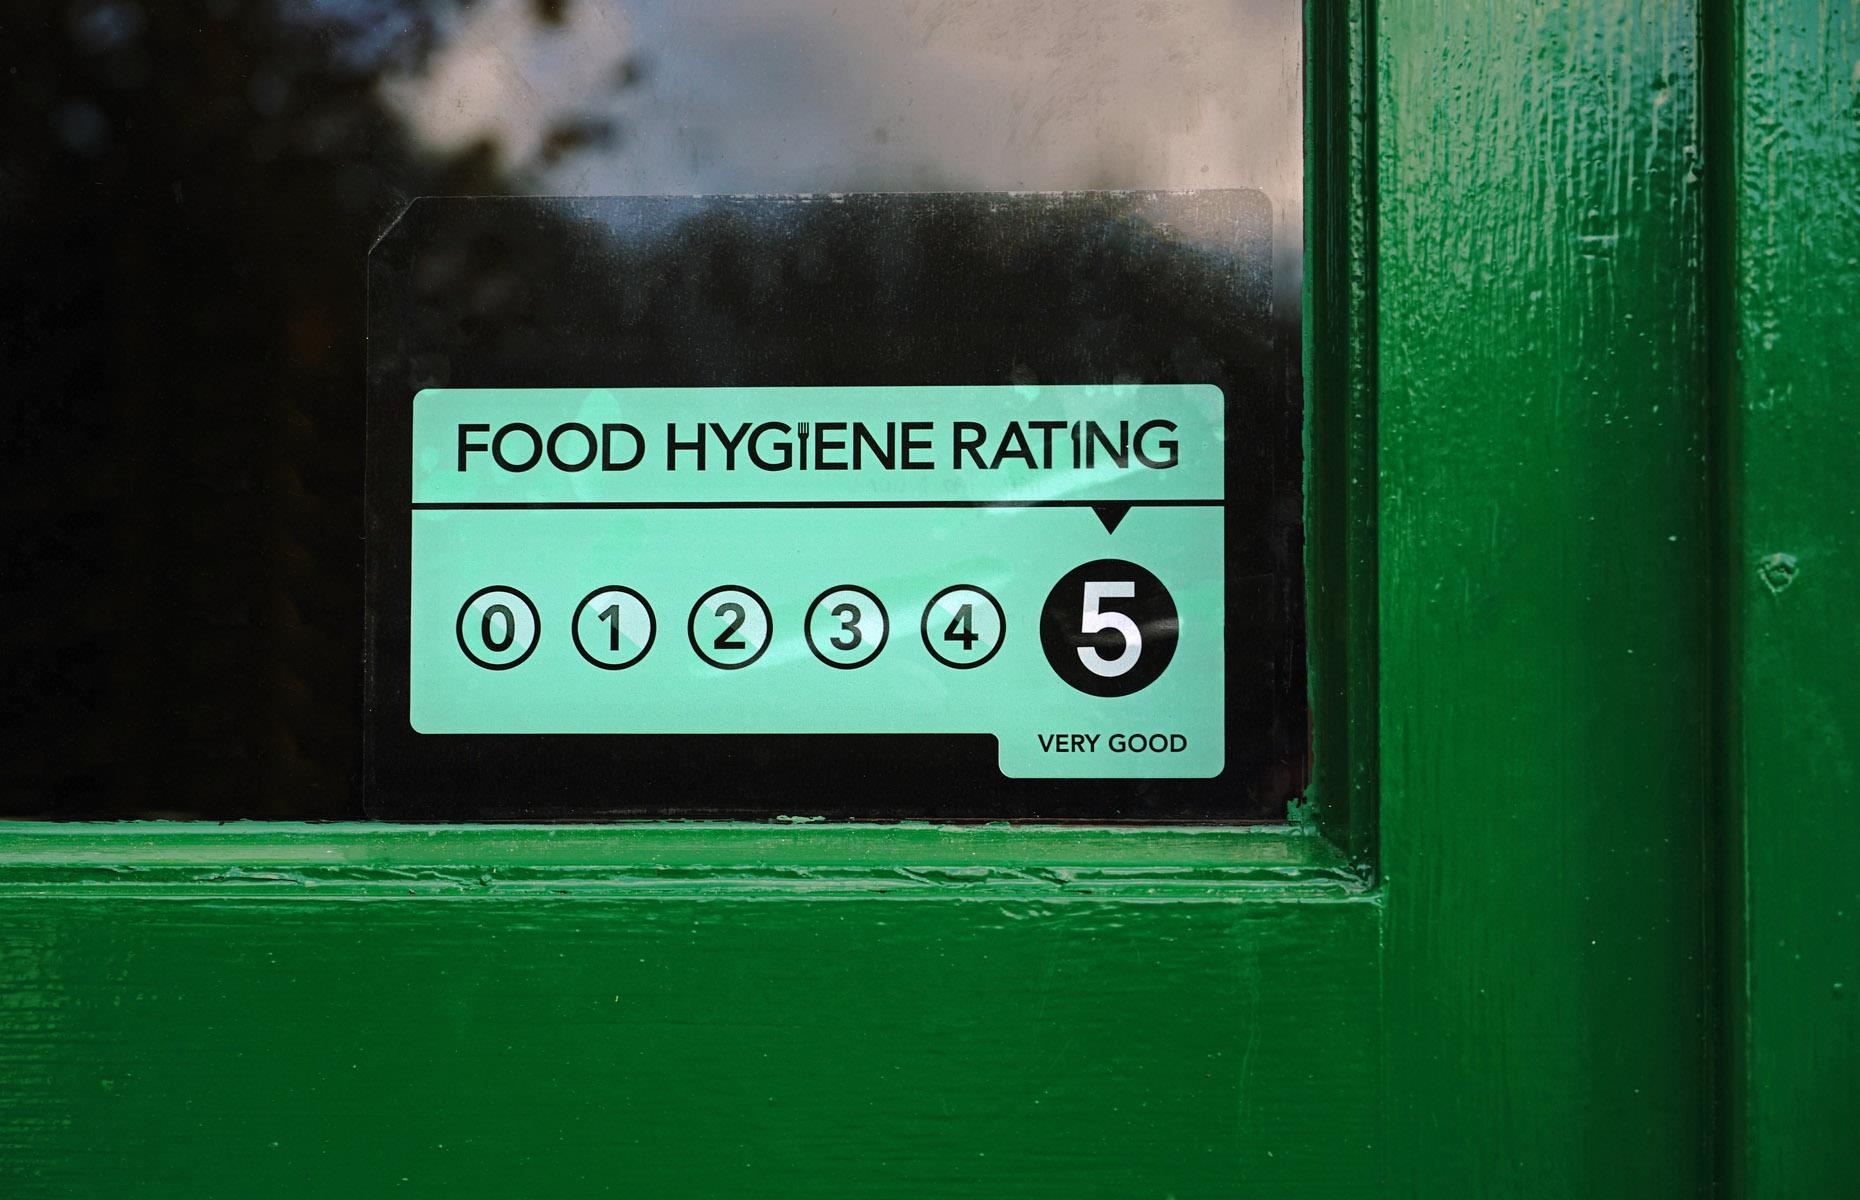 Hygiene ratings for buildings